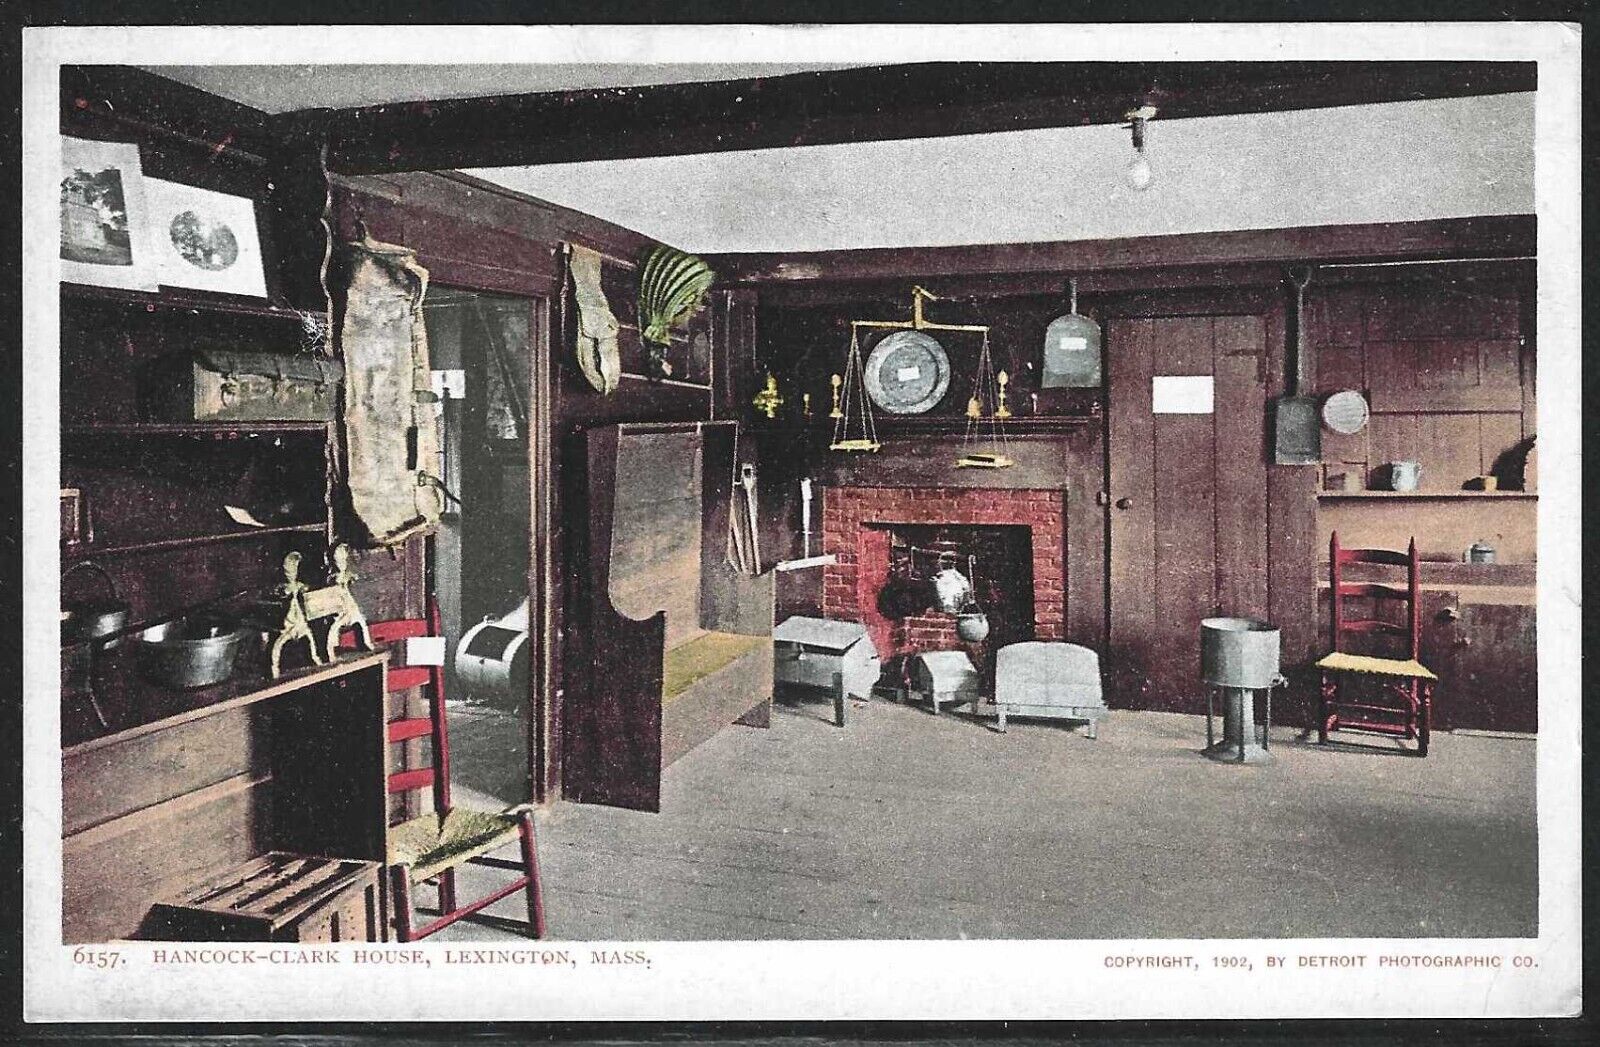 Hancock-Clark House, Lexington, MA, 1902 Postcard, Detroit Photographic Co.